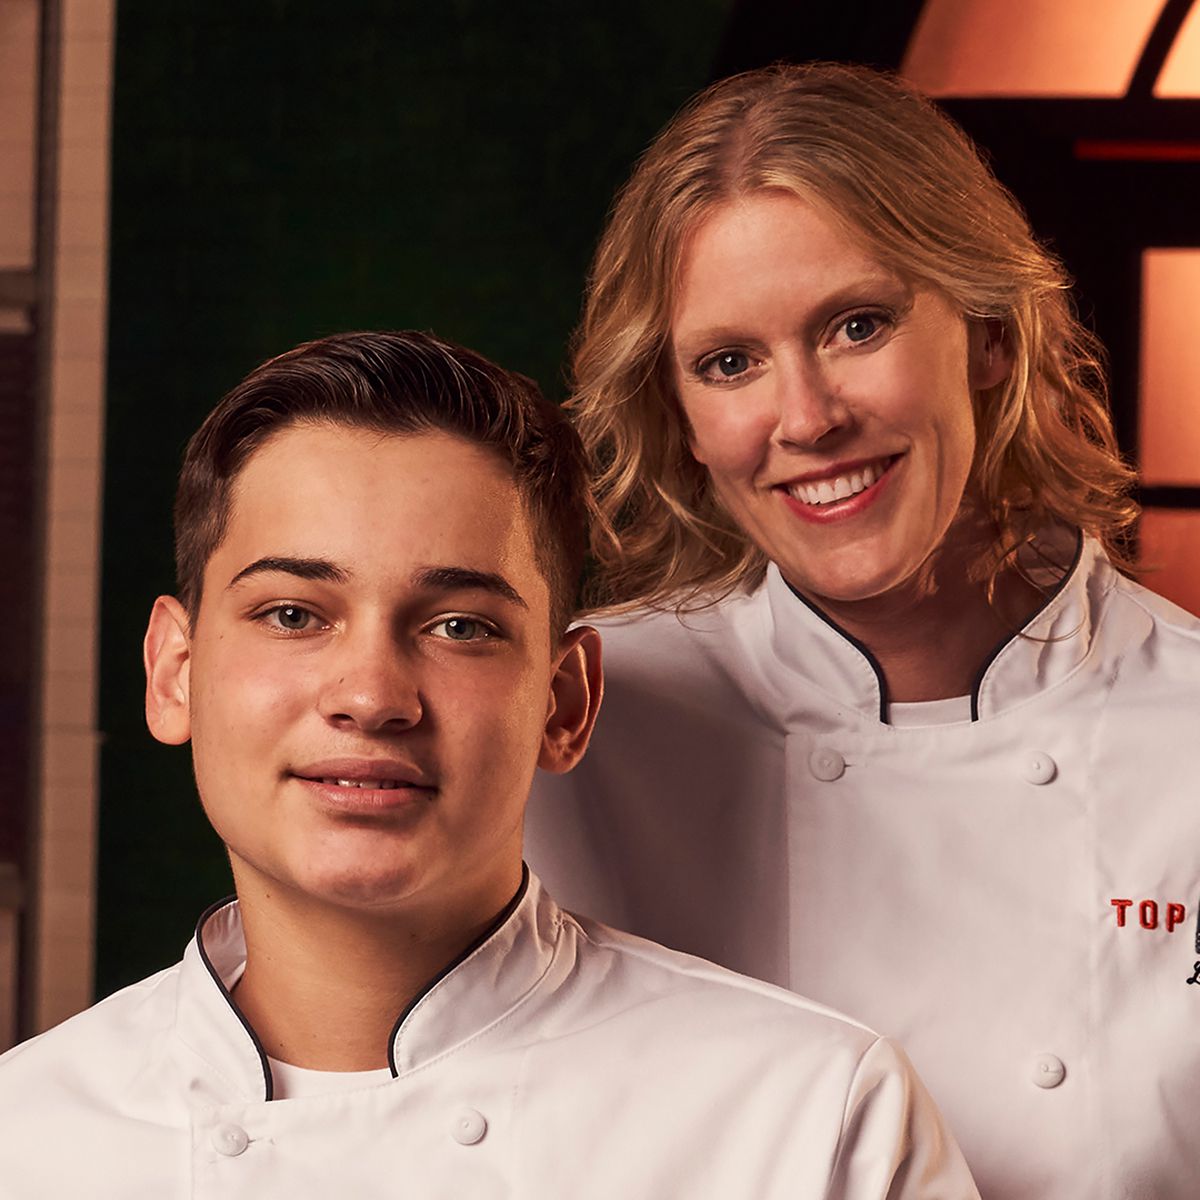 Top Chef Family Style contestants Kaj Friis-Hecht and Liz Thorpe